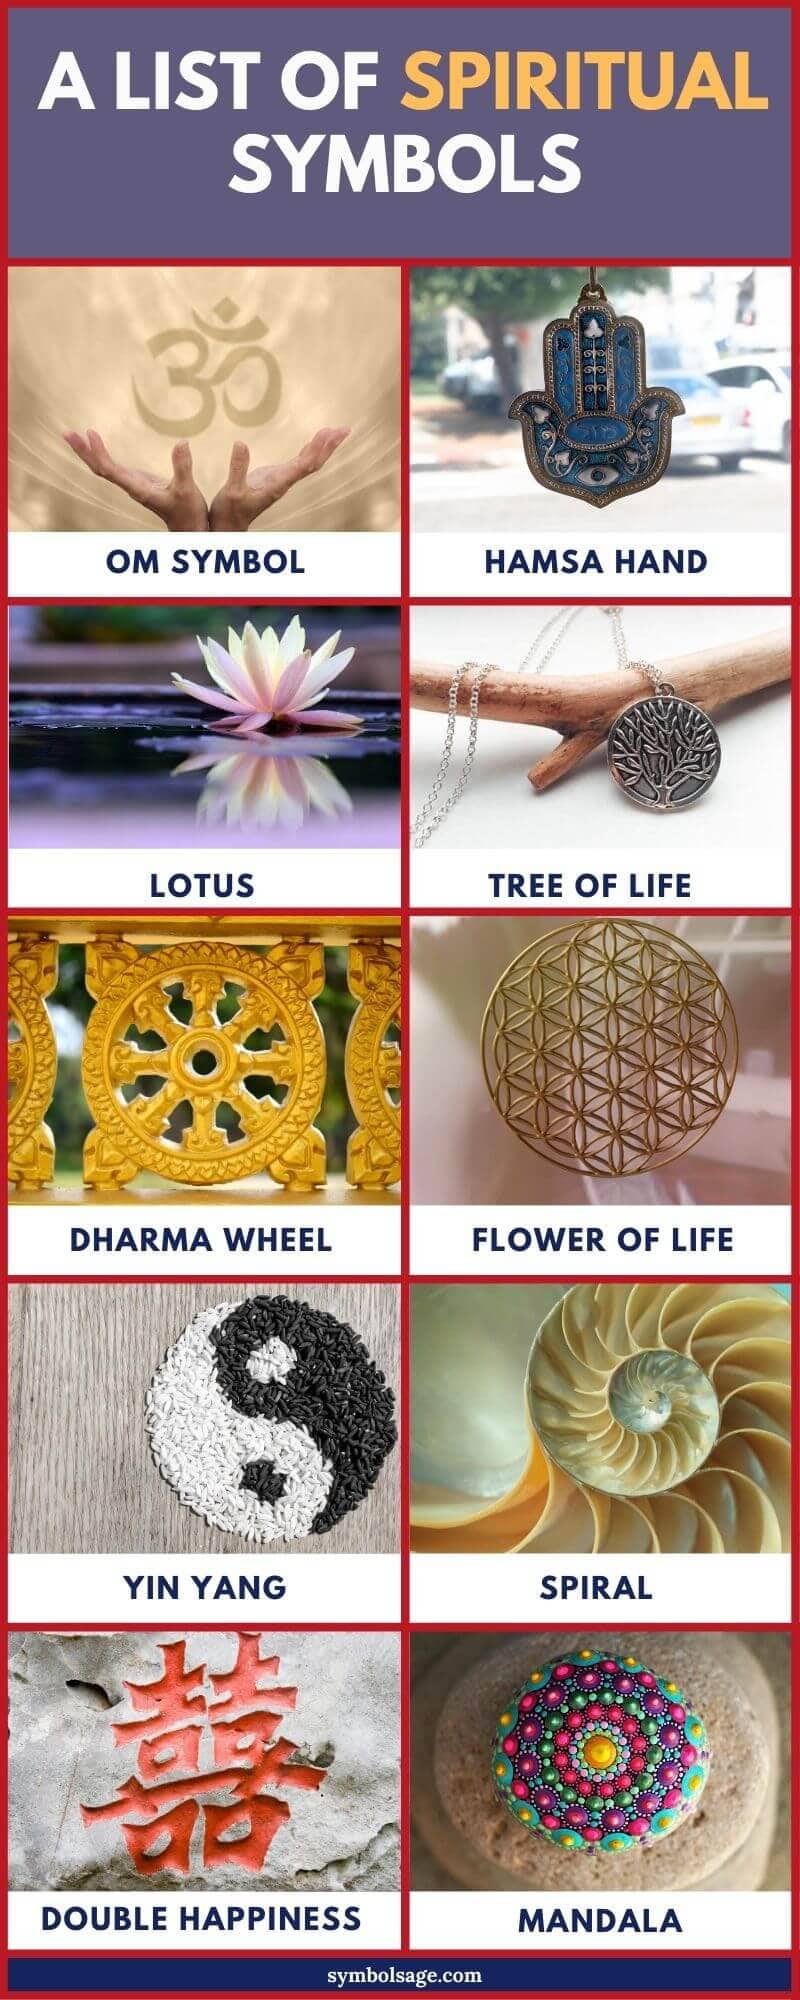 Spiritual symbols